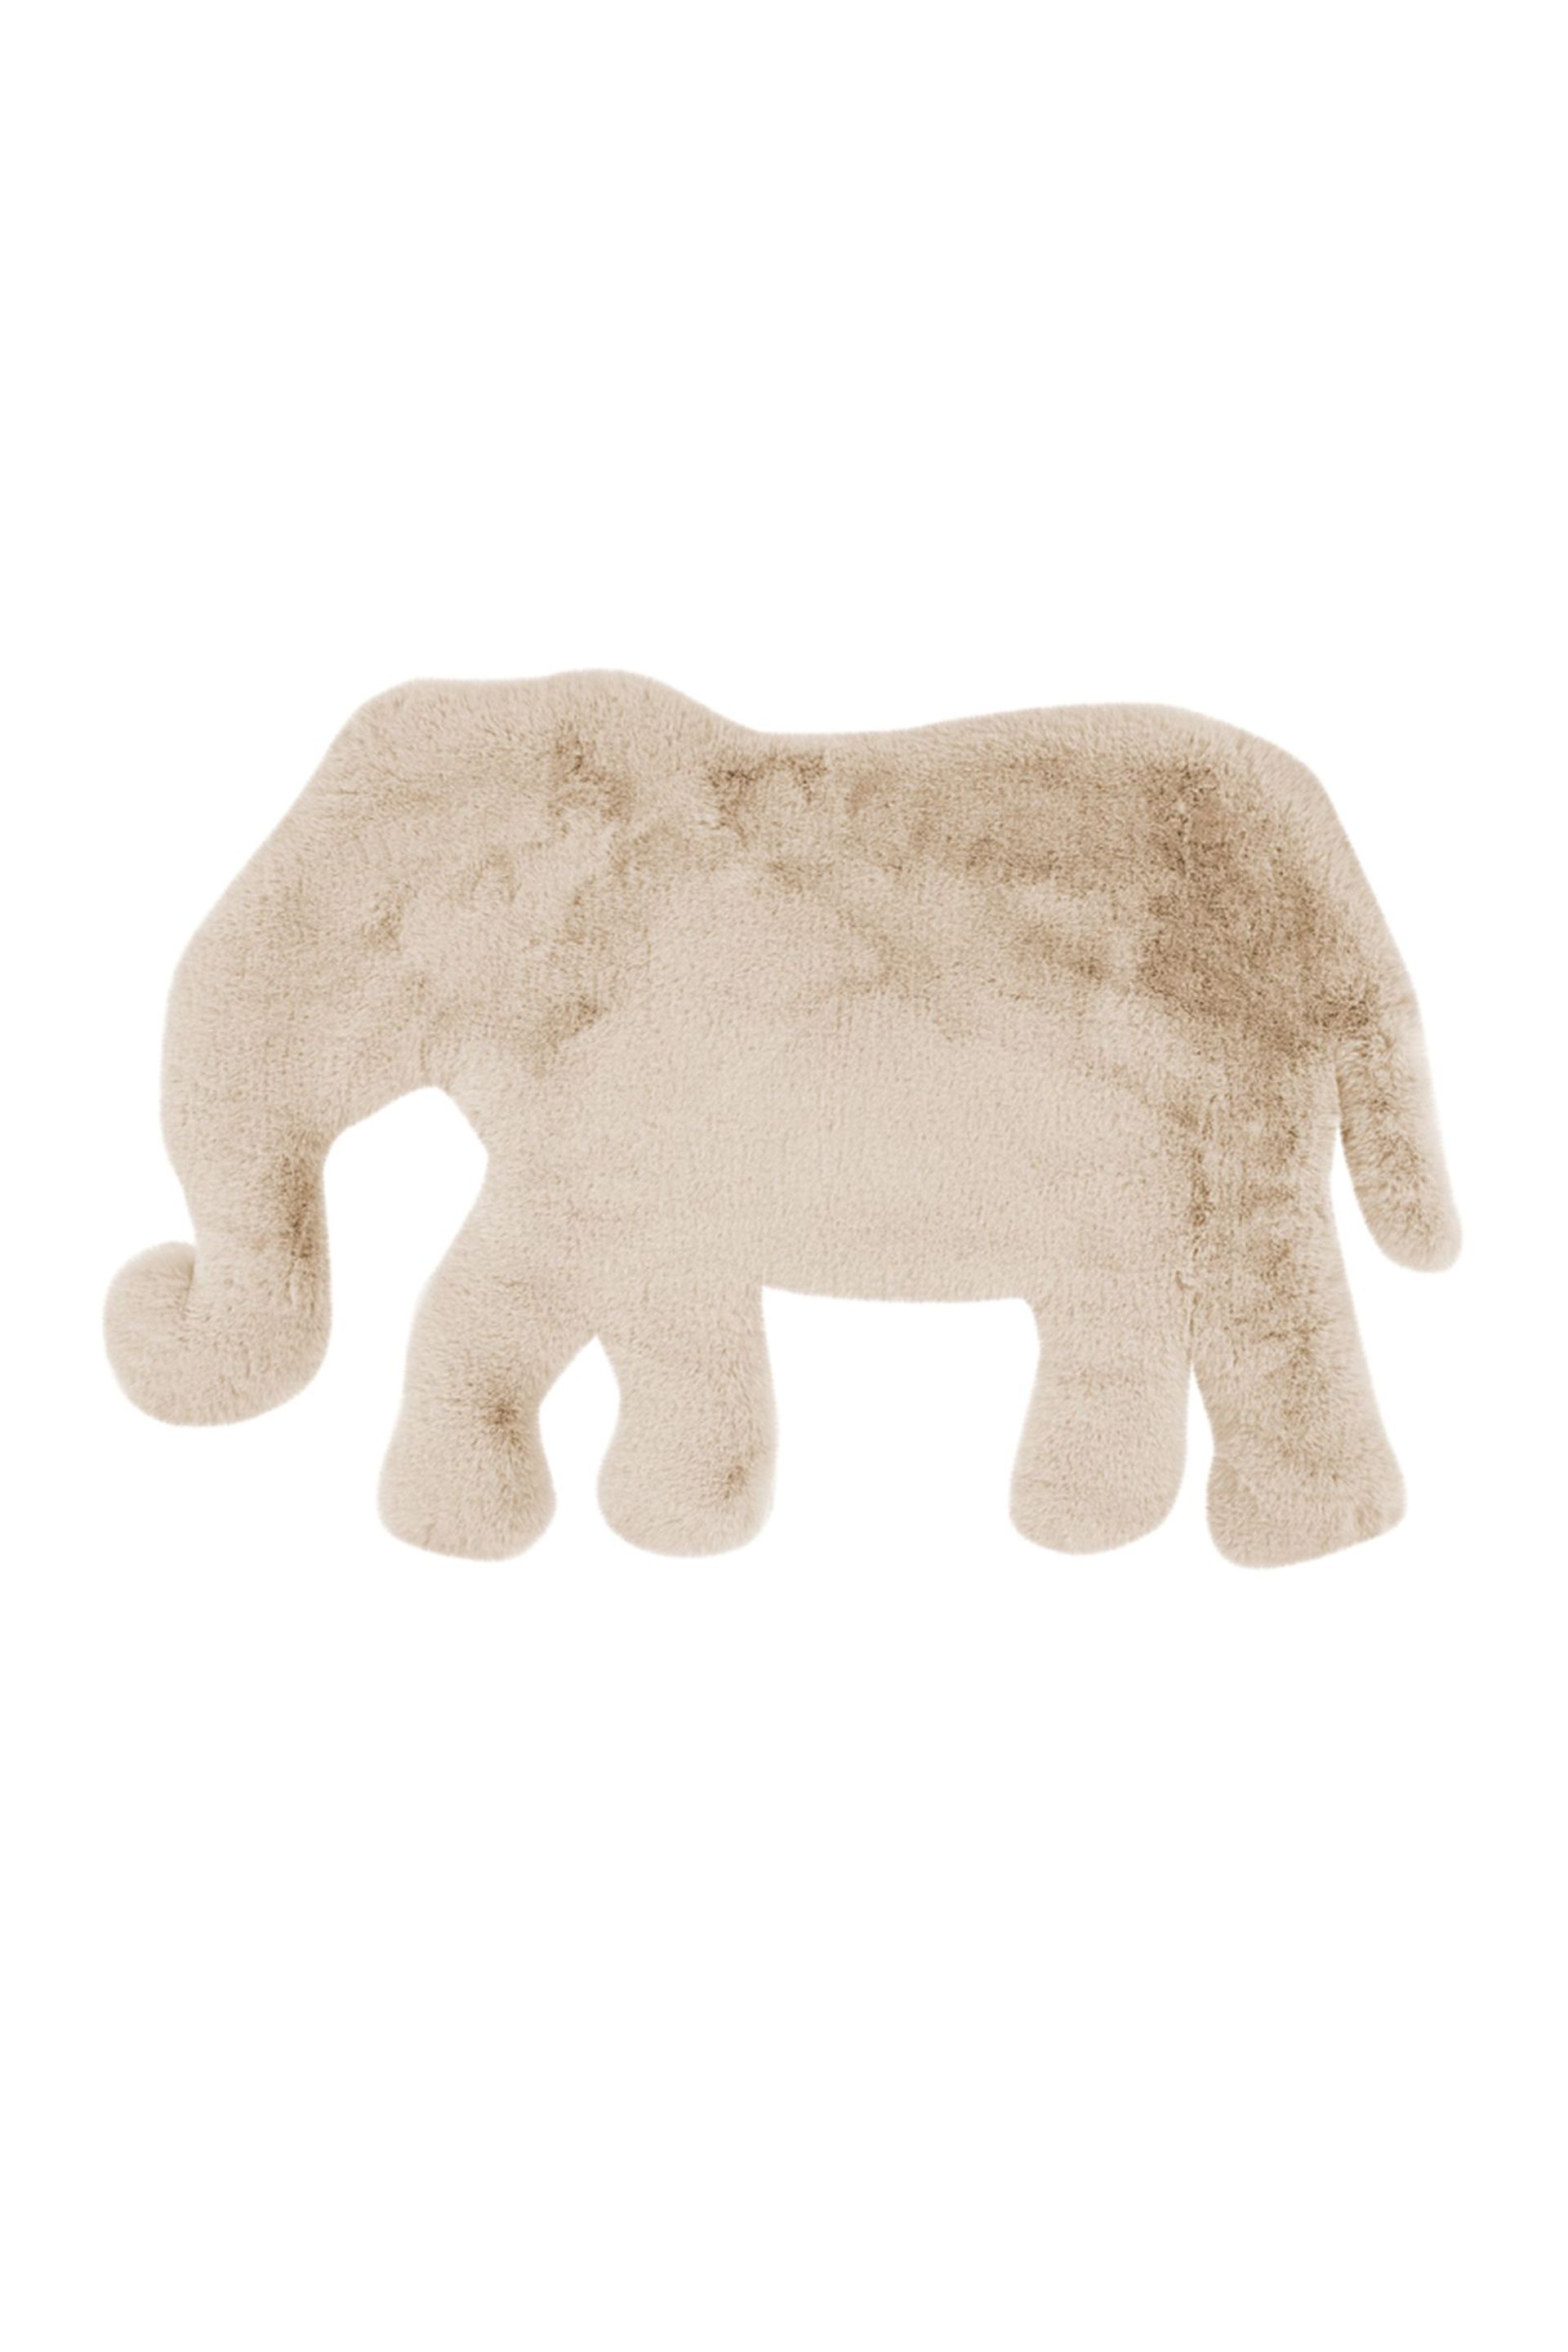 Teppich Lovely Kids 125-Elephant Creme 60 cm x 90 cm